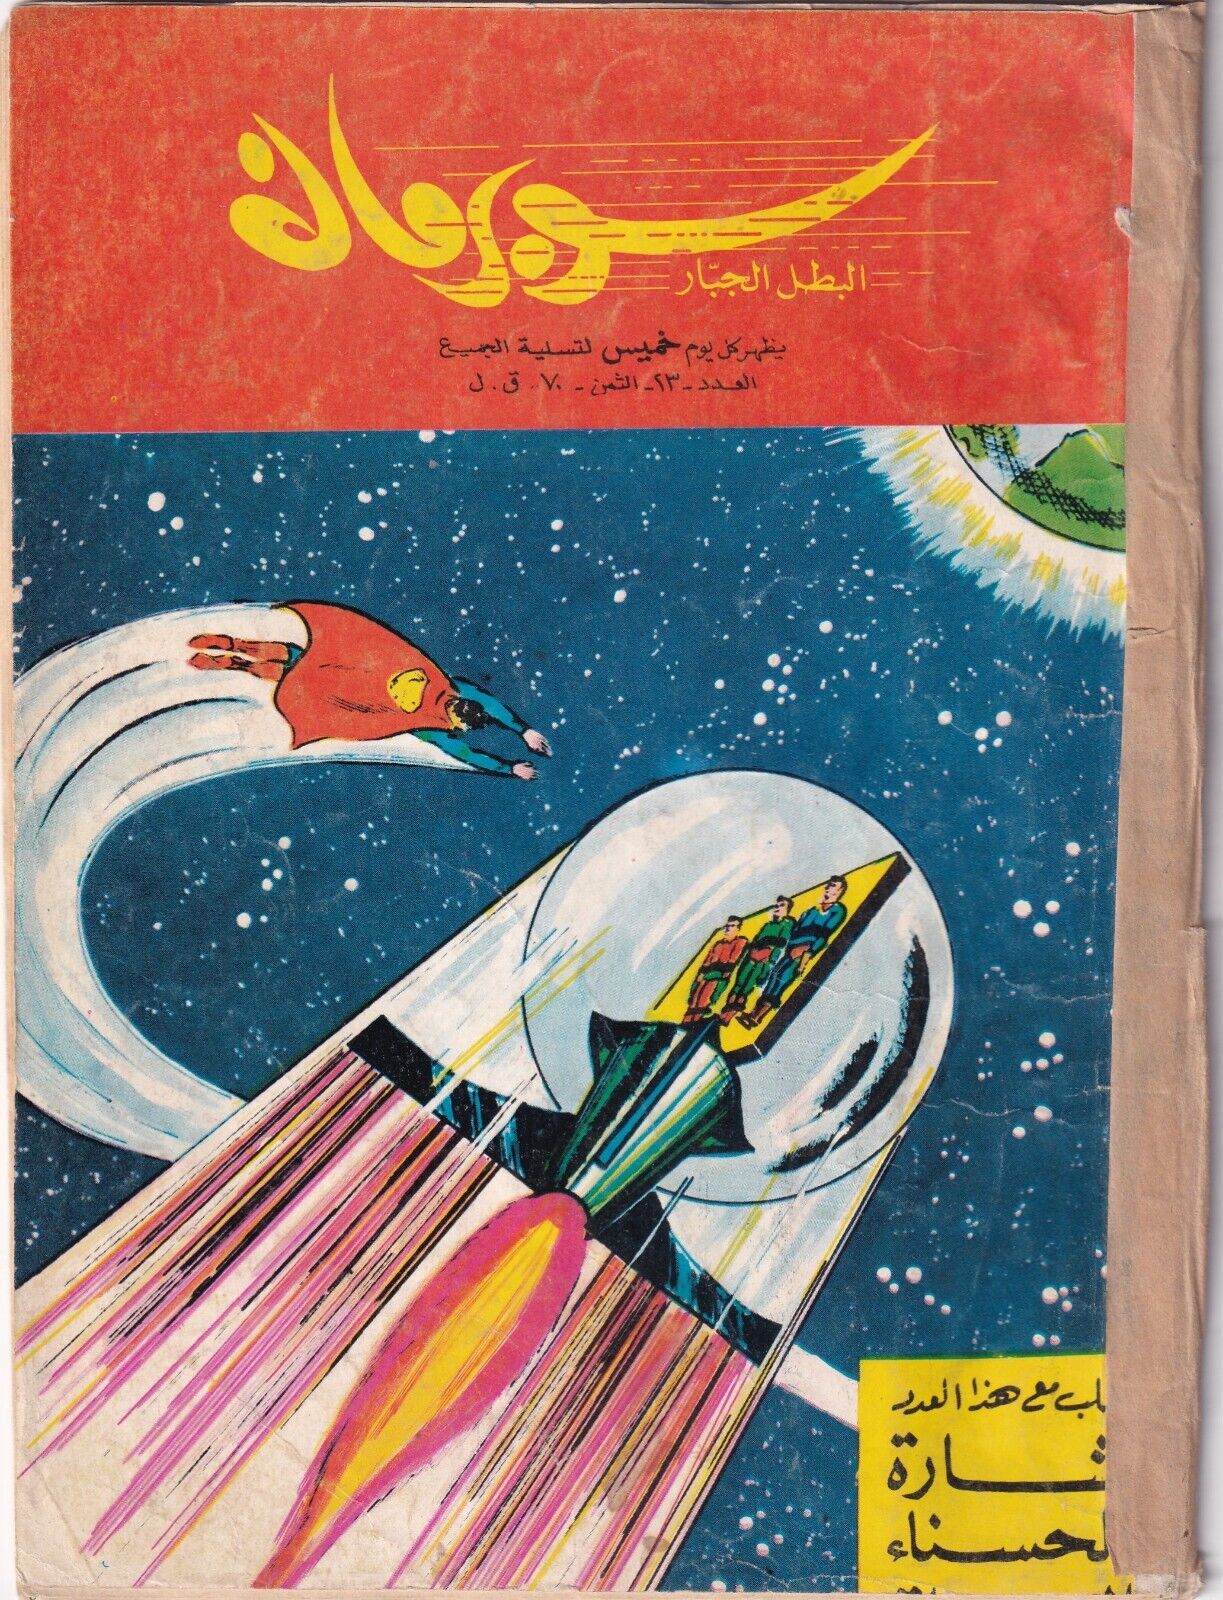 SUPERMAN LEBANESE ARABIC ORIGINAL COMICS 1964 NO.23 COLORED.مجلة سوبر مان كوميكس